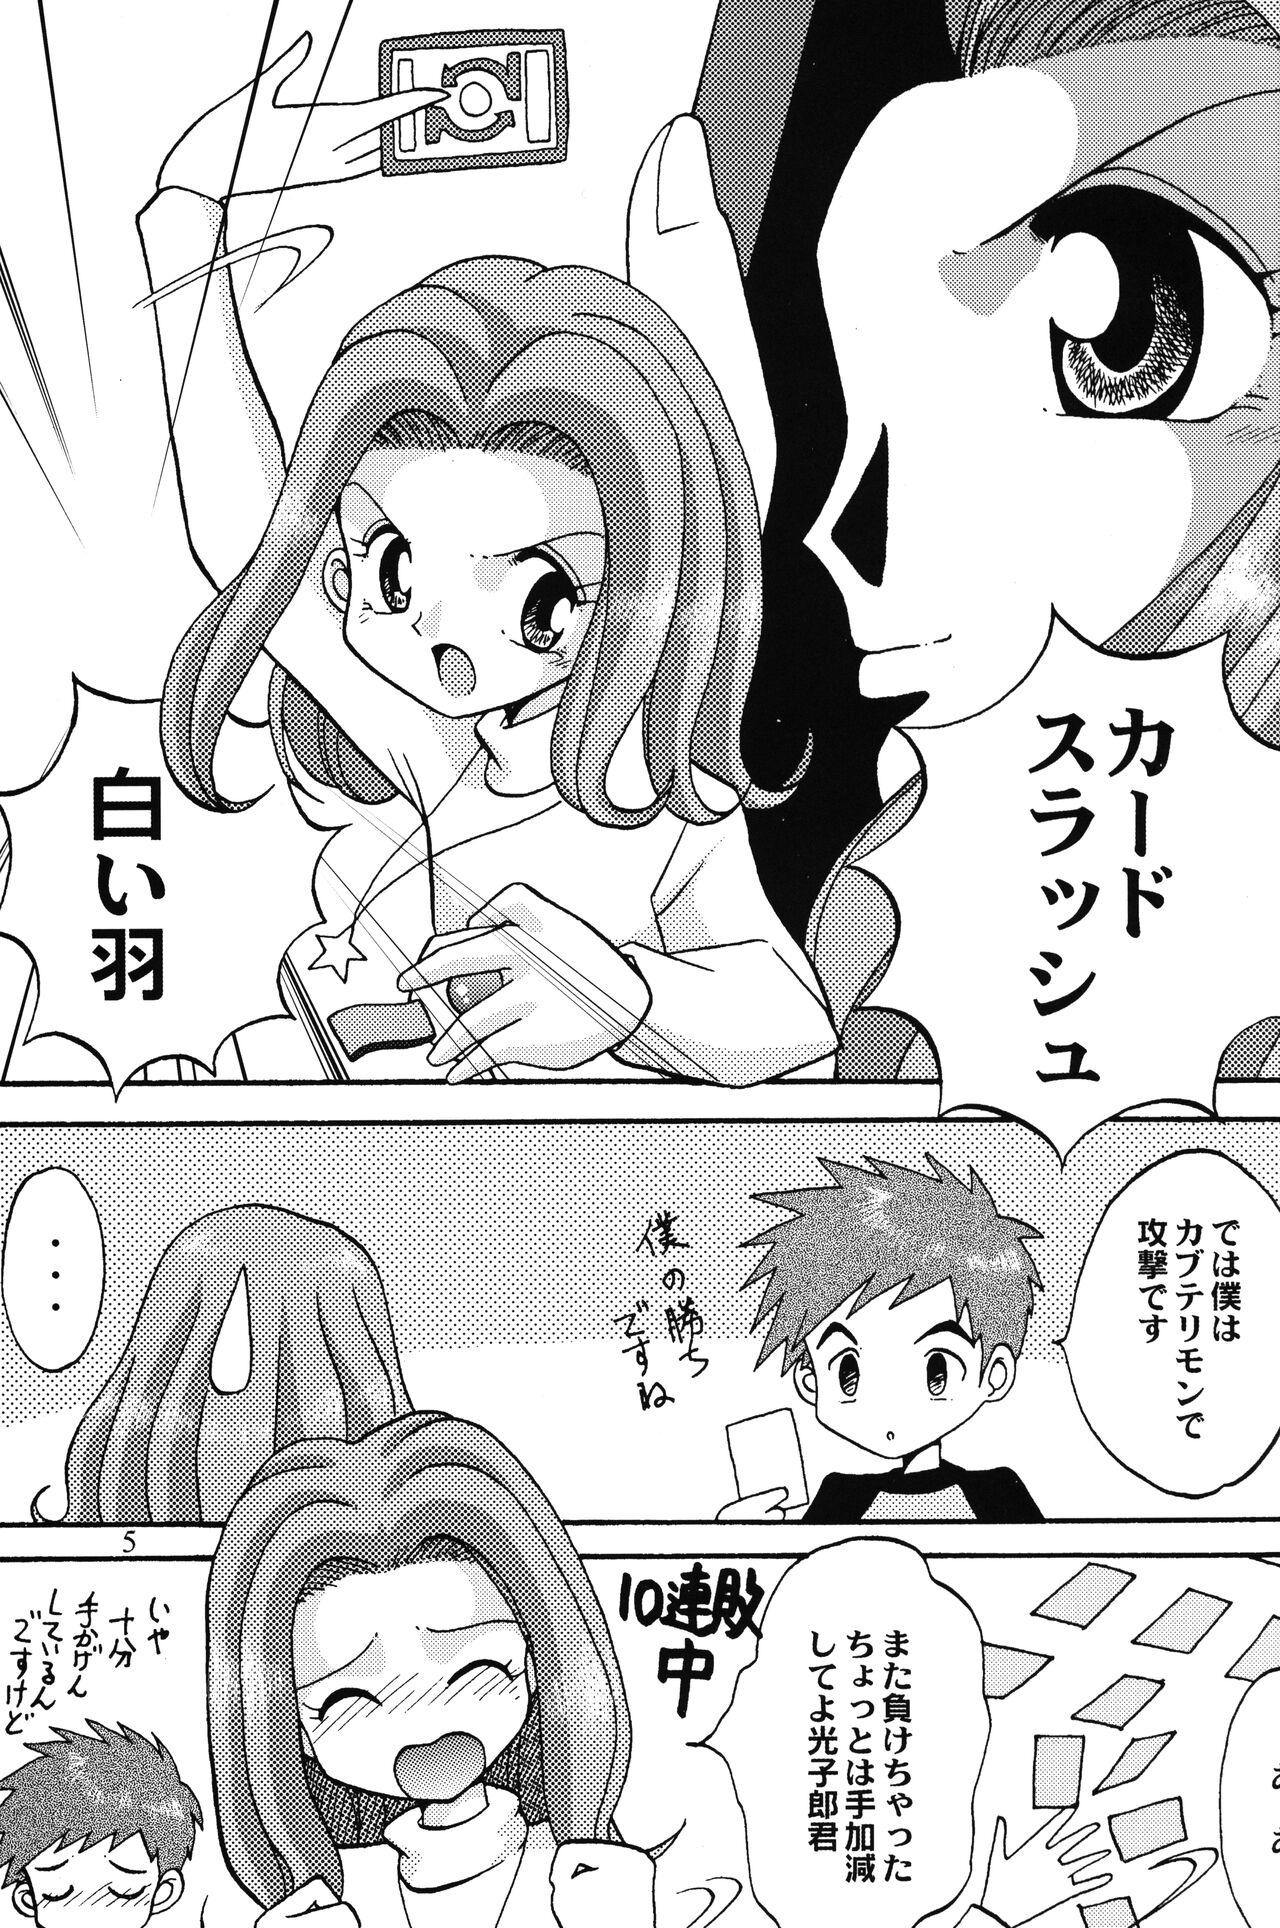 Slutty Sora Mimi Hour 4 - Digimon adventure Cousin - Page 4